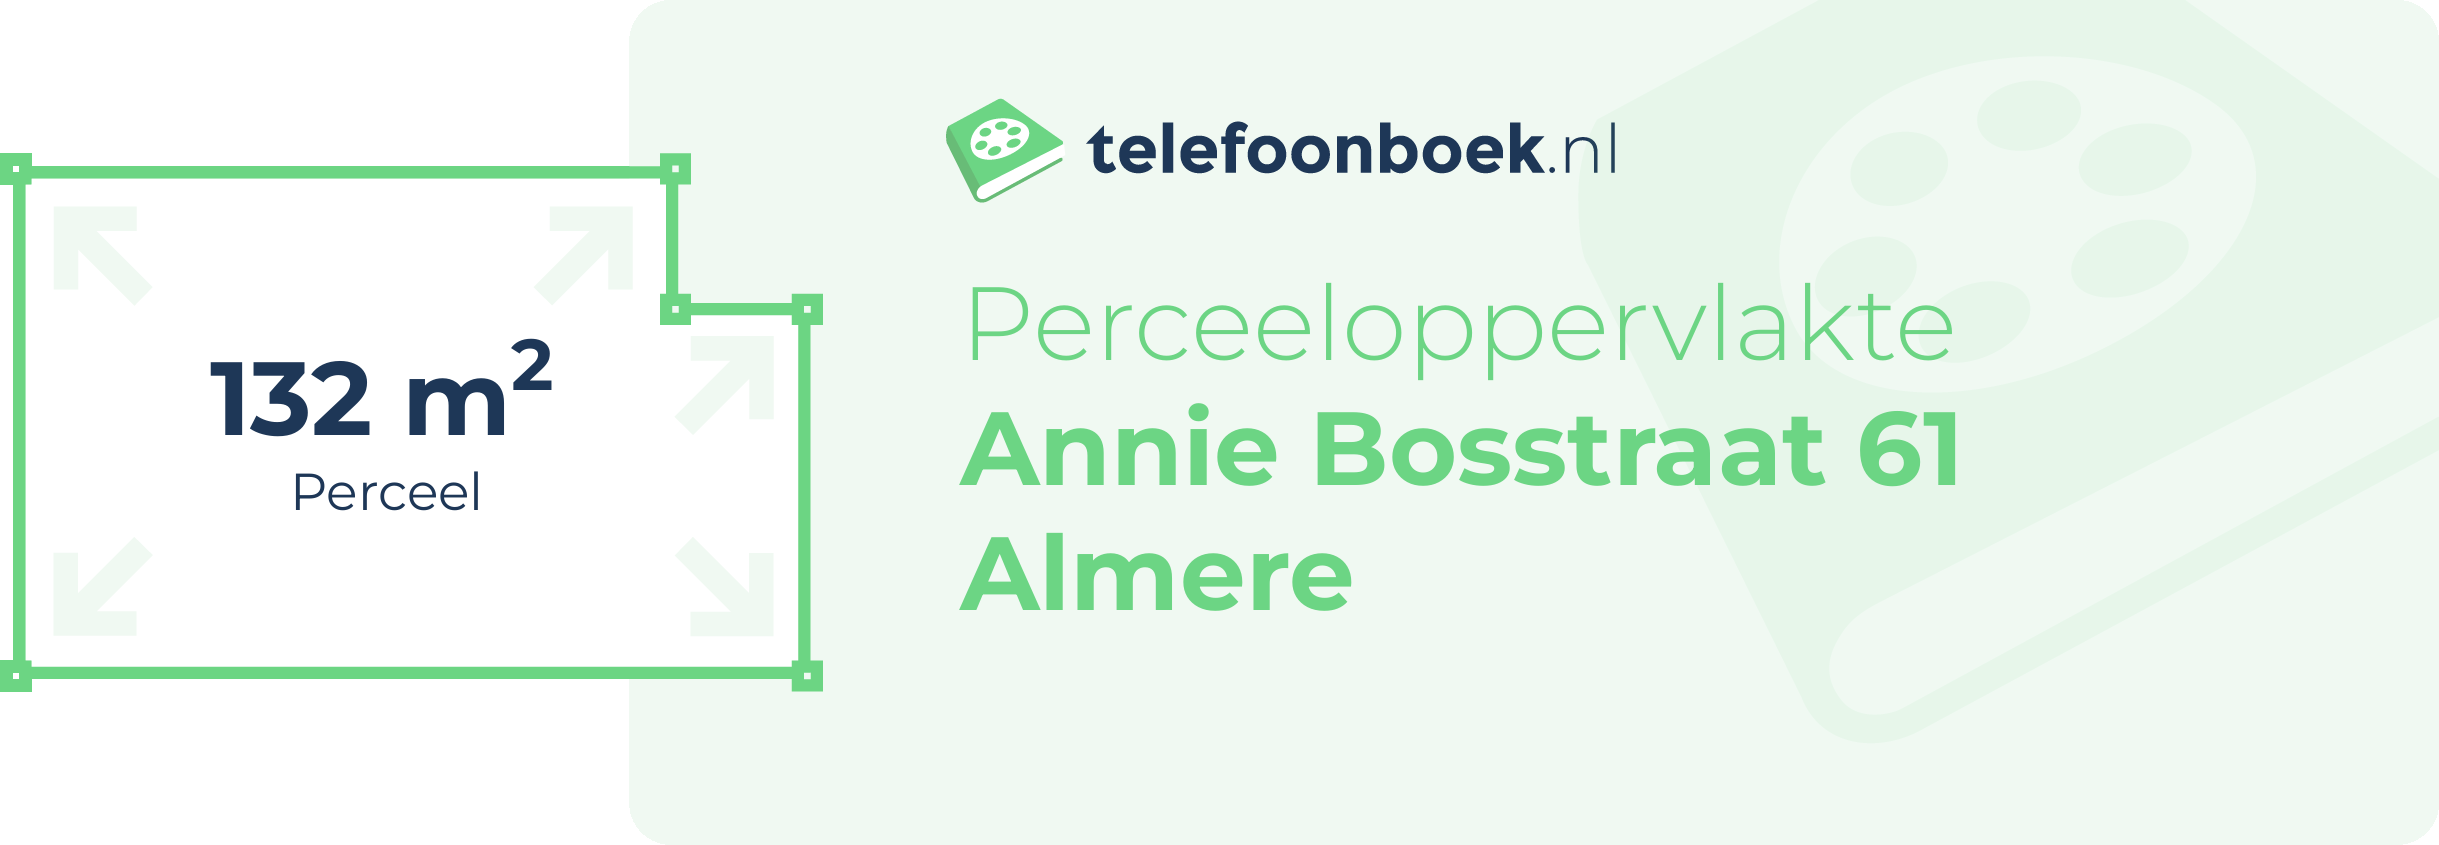 Perceeloppervlakte Annie Bosstraat 61 Almere